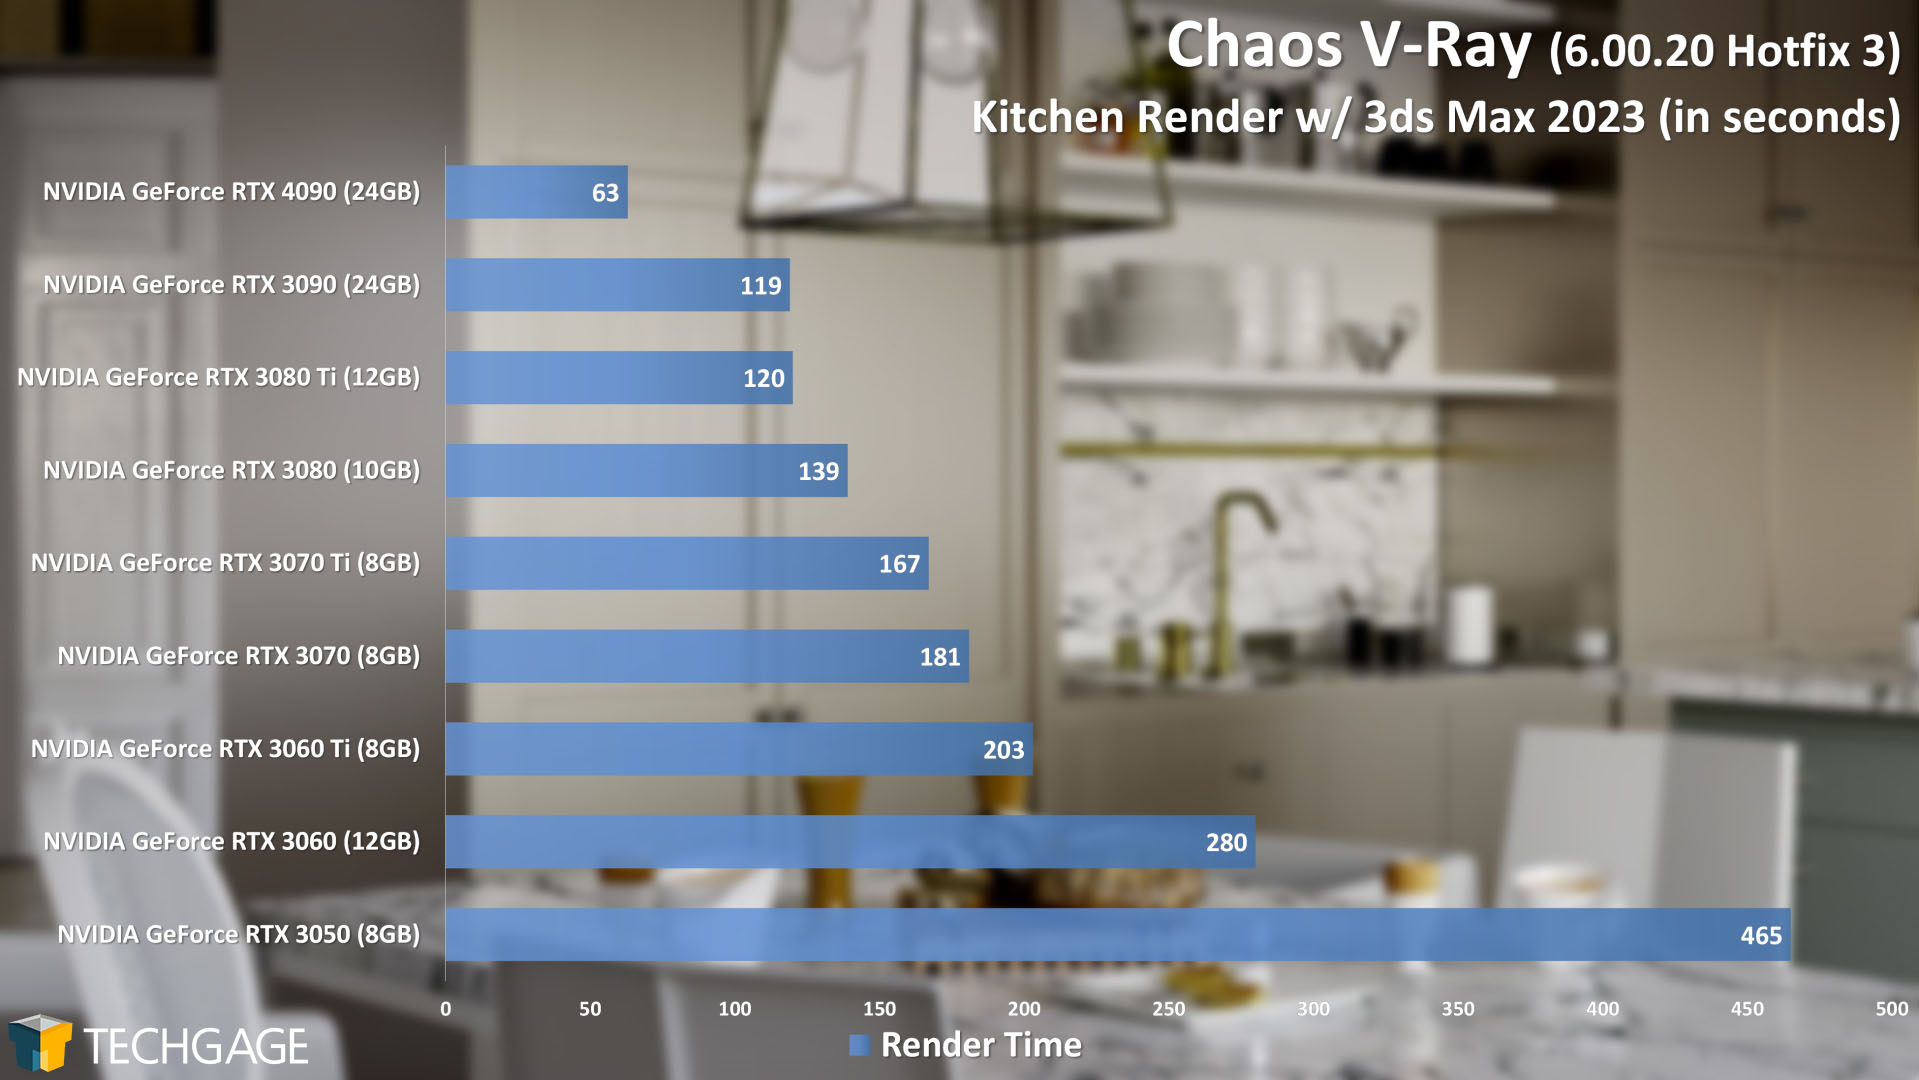 Chaos V-Ray Rendering - Kitchen (NVIDIA GeForce RTX 4090)